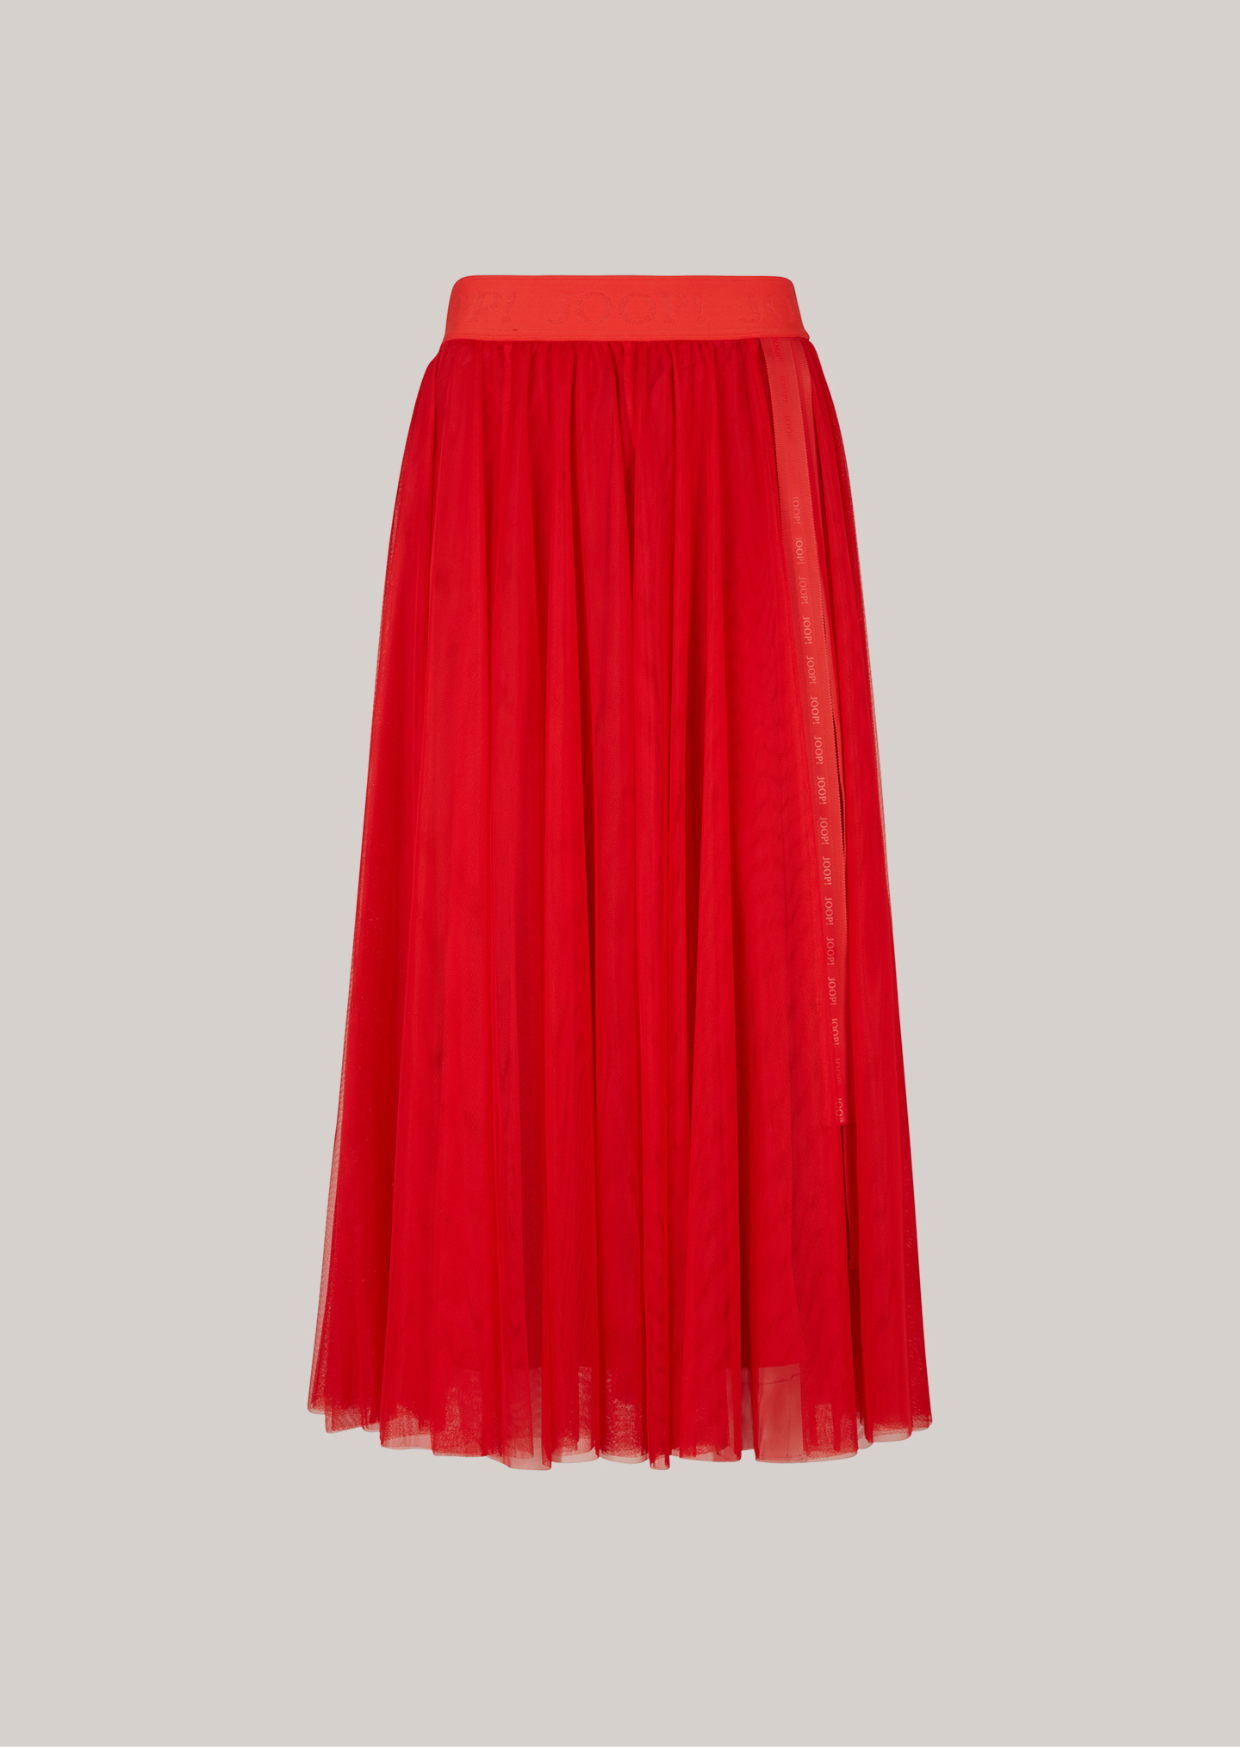 joop Skirt rood 